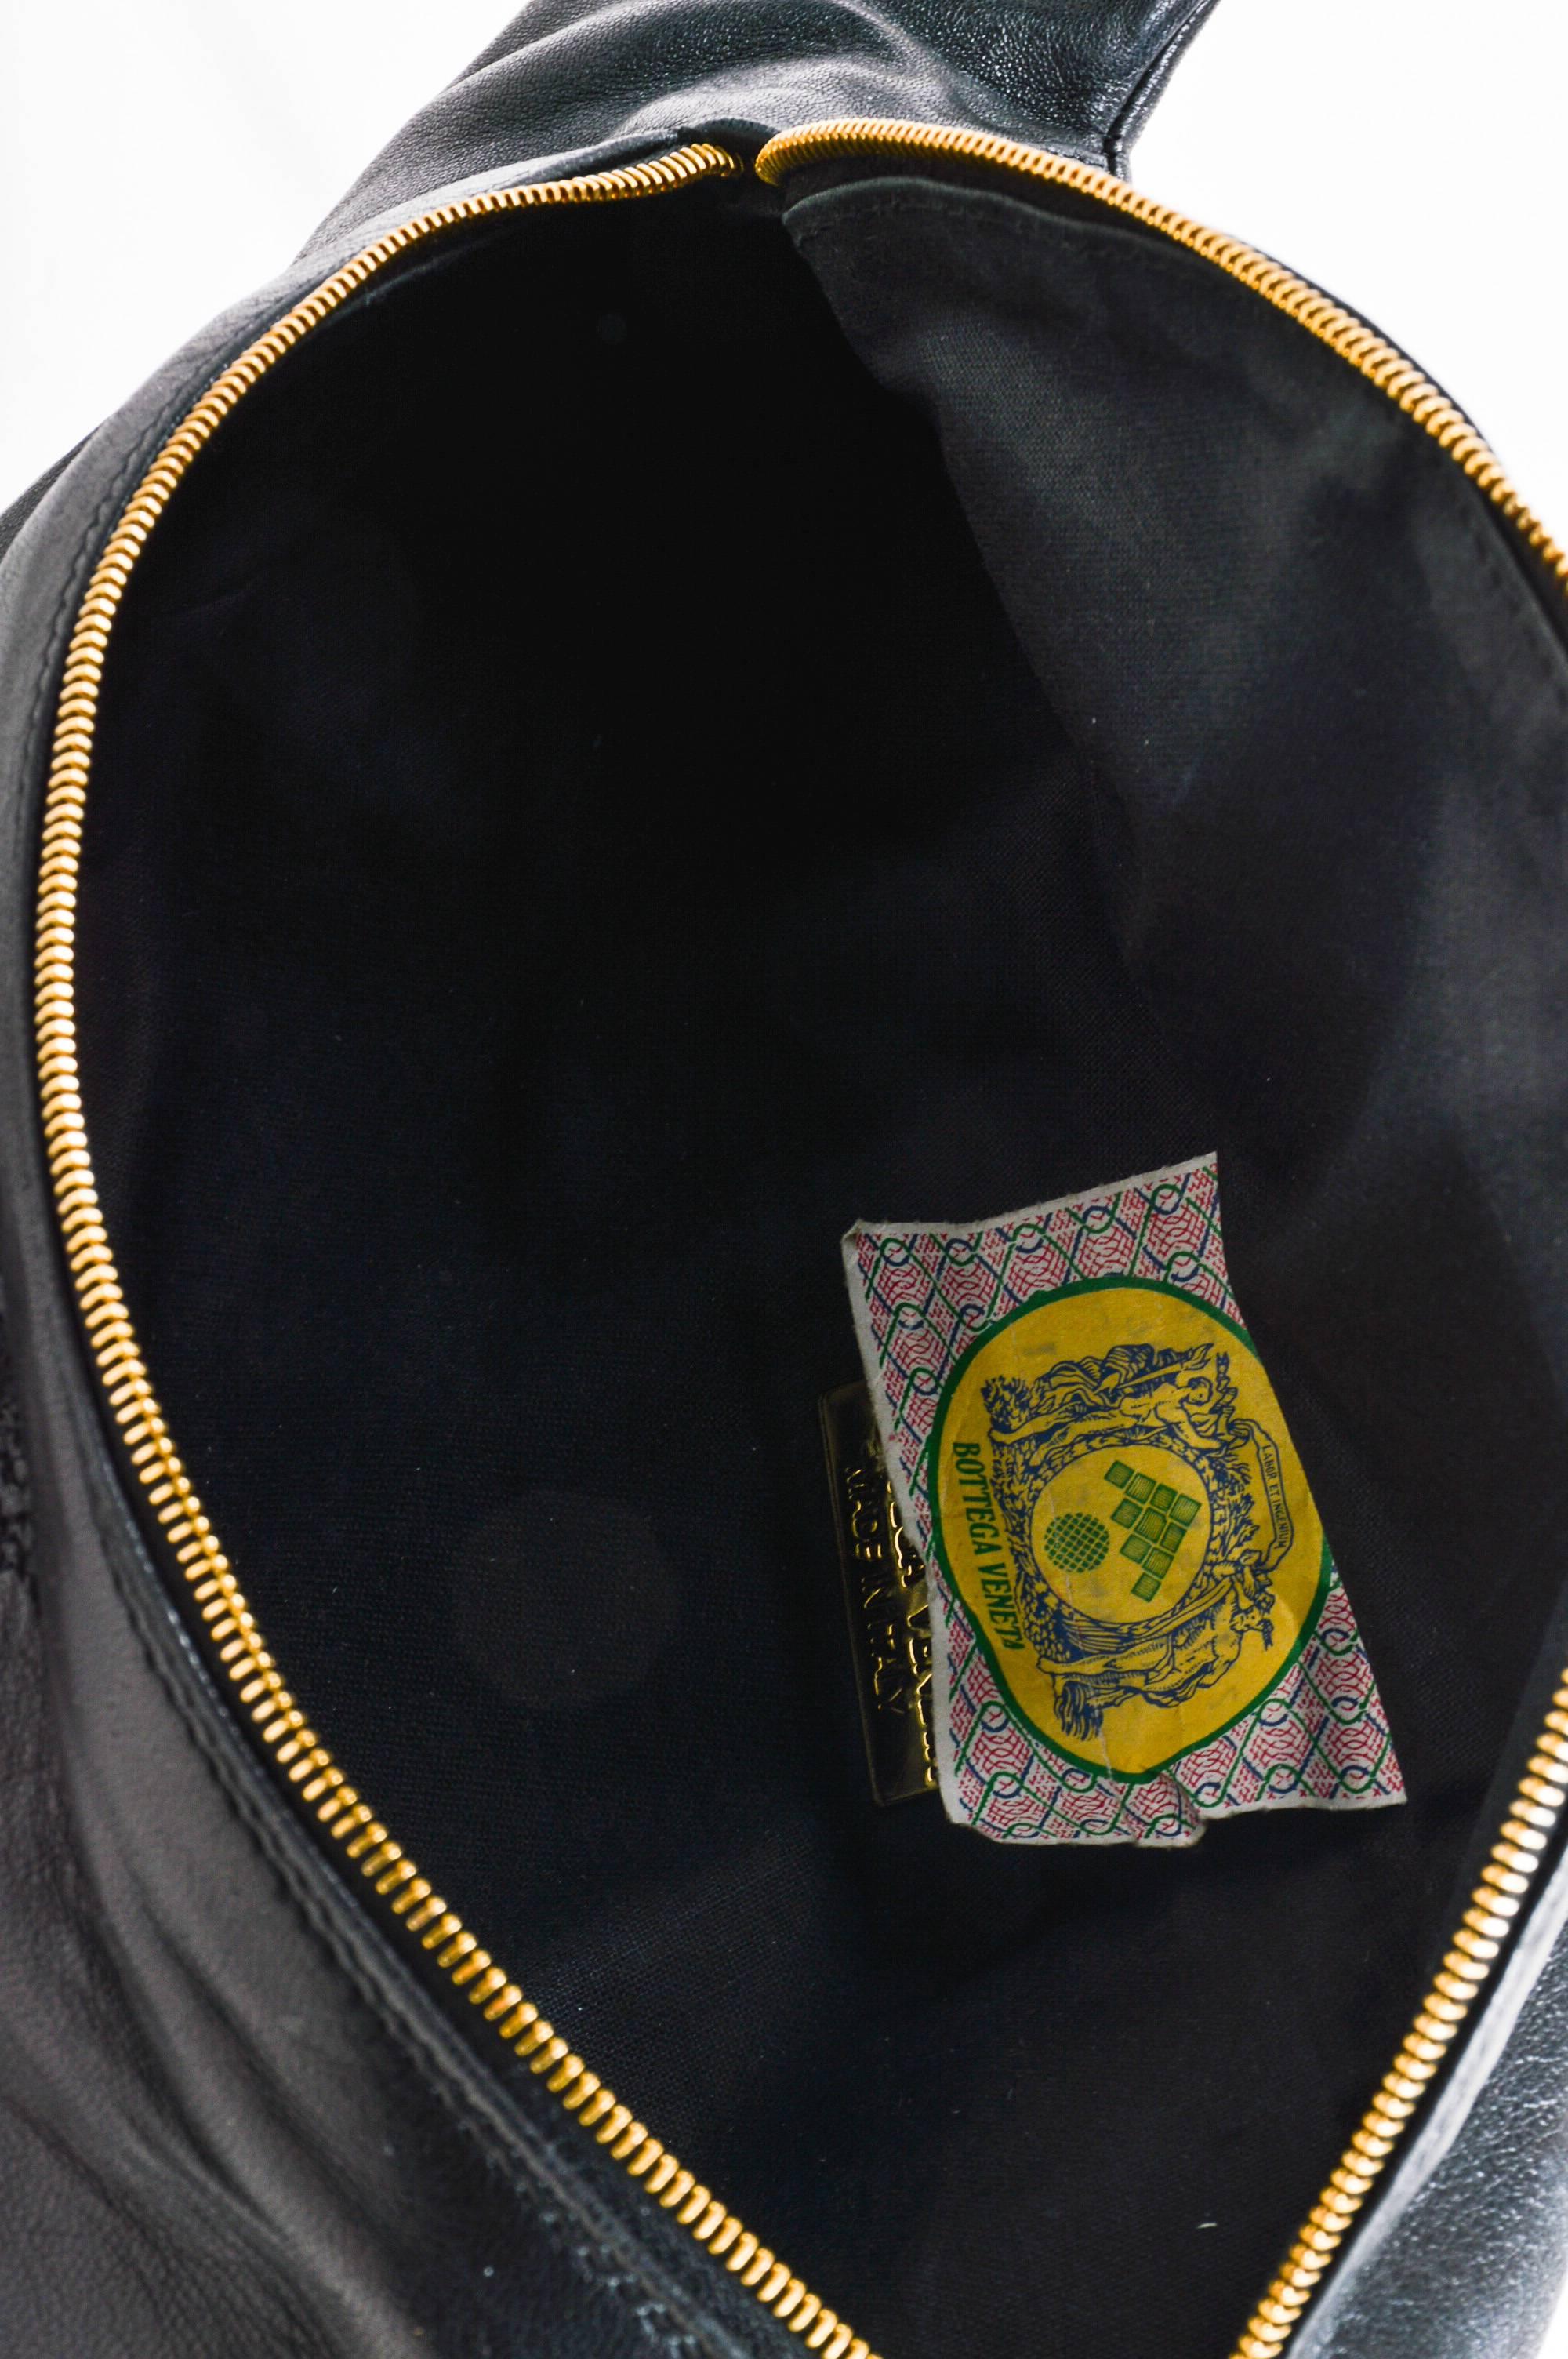 Women's Vintage Bottega Veneta Black Leather & Gold Tone Metal Fanny Pack Hip Bag